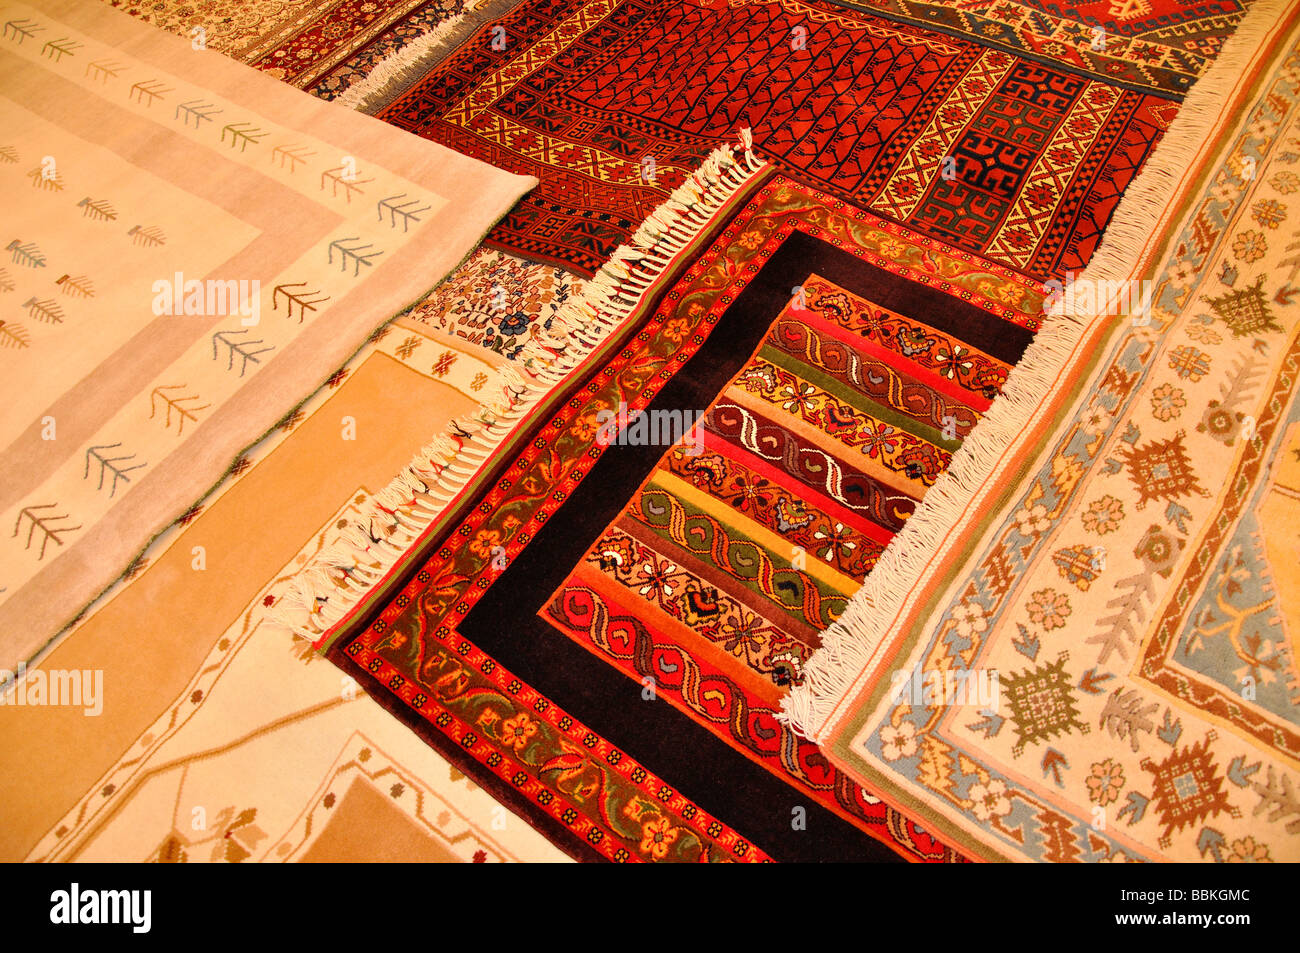 Varietà di tappeti in fabbrica di tappeti, Denizli, Denizli Provincia, Turchia Foto Stock